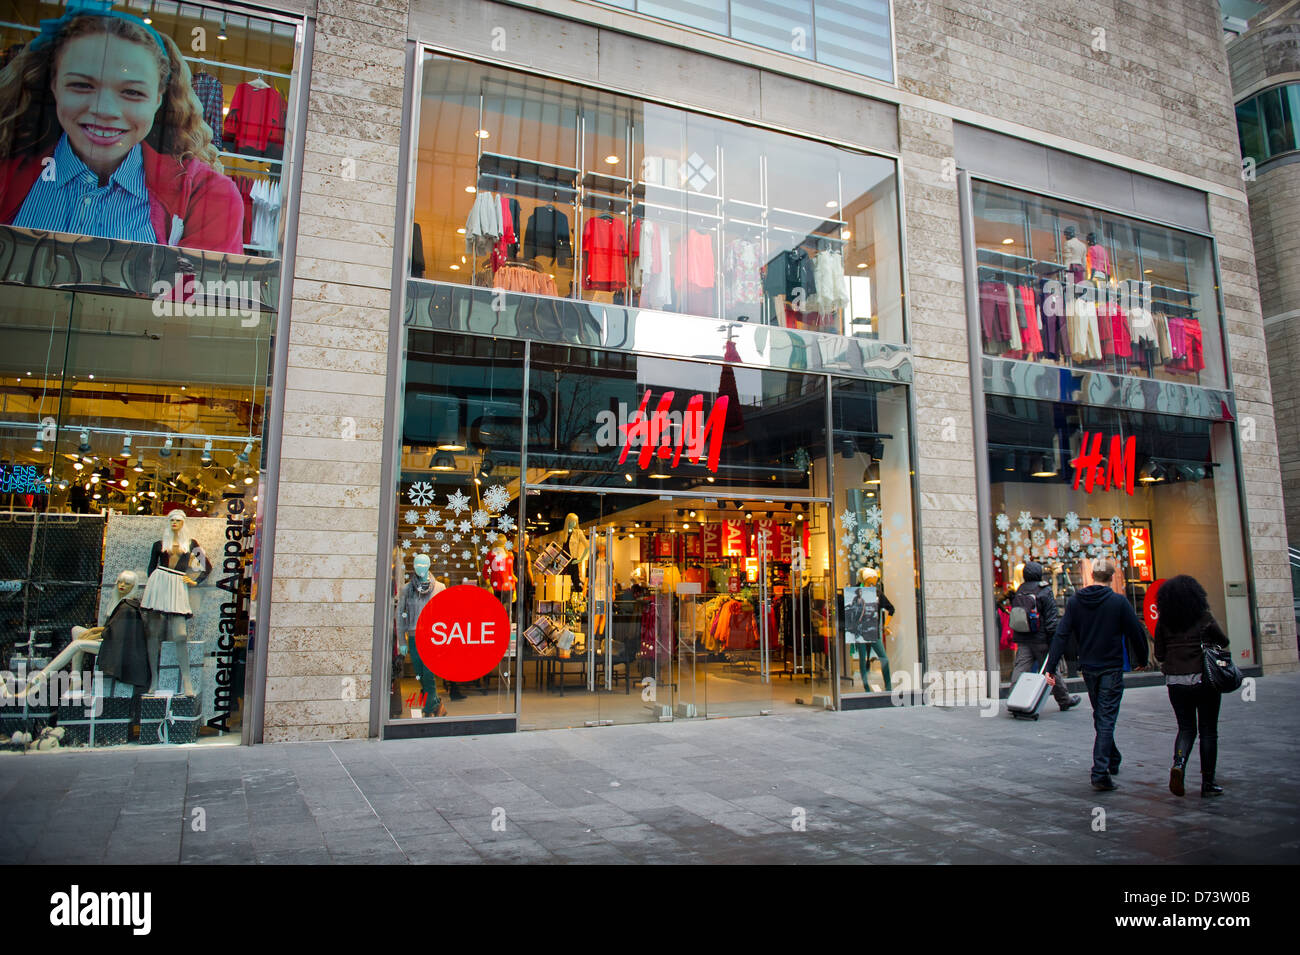 H&M Store in Liverpool, United Kingdom Stock Photo - Alamy